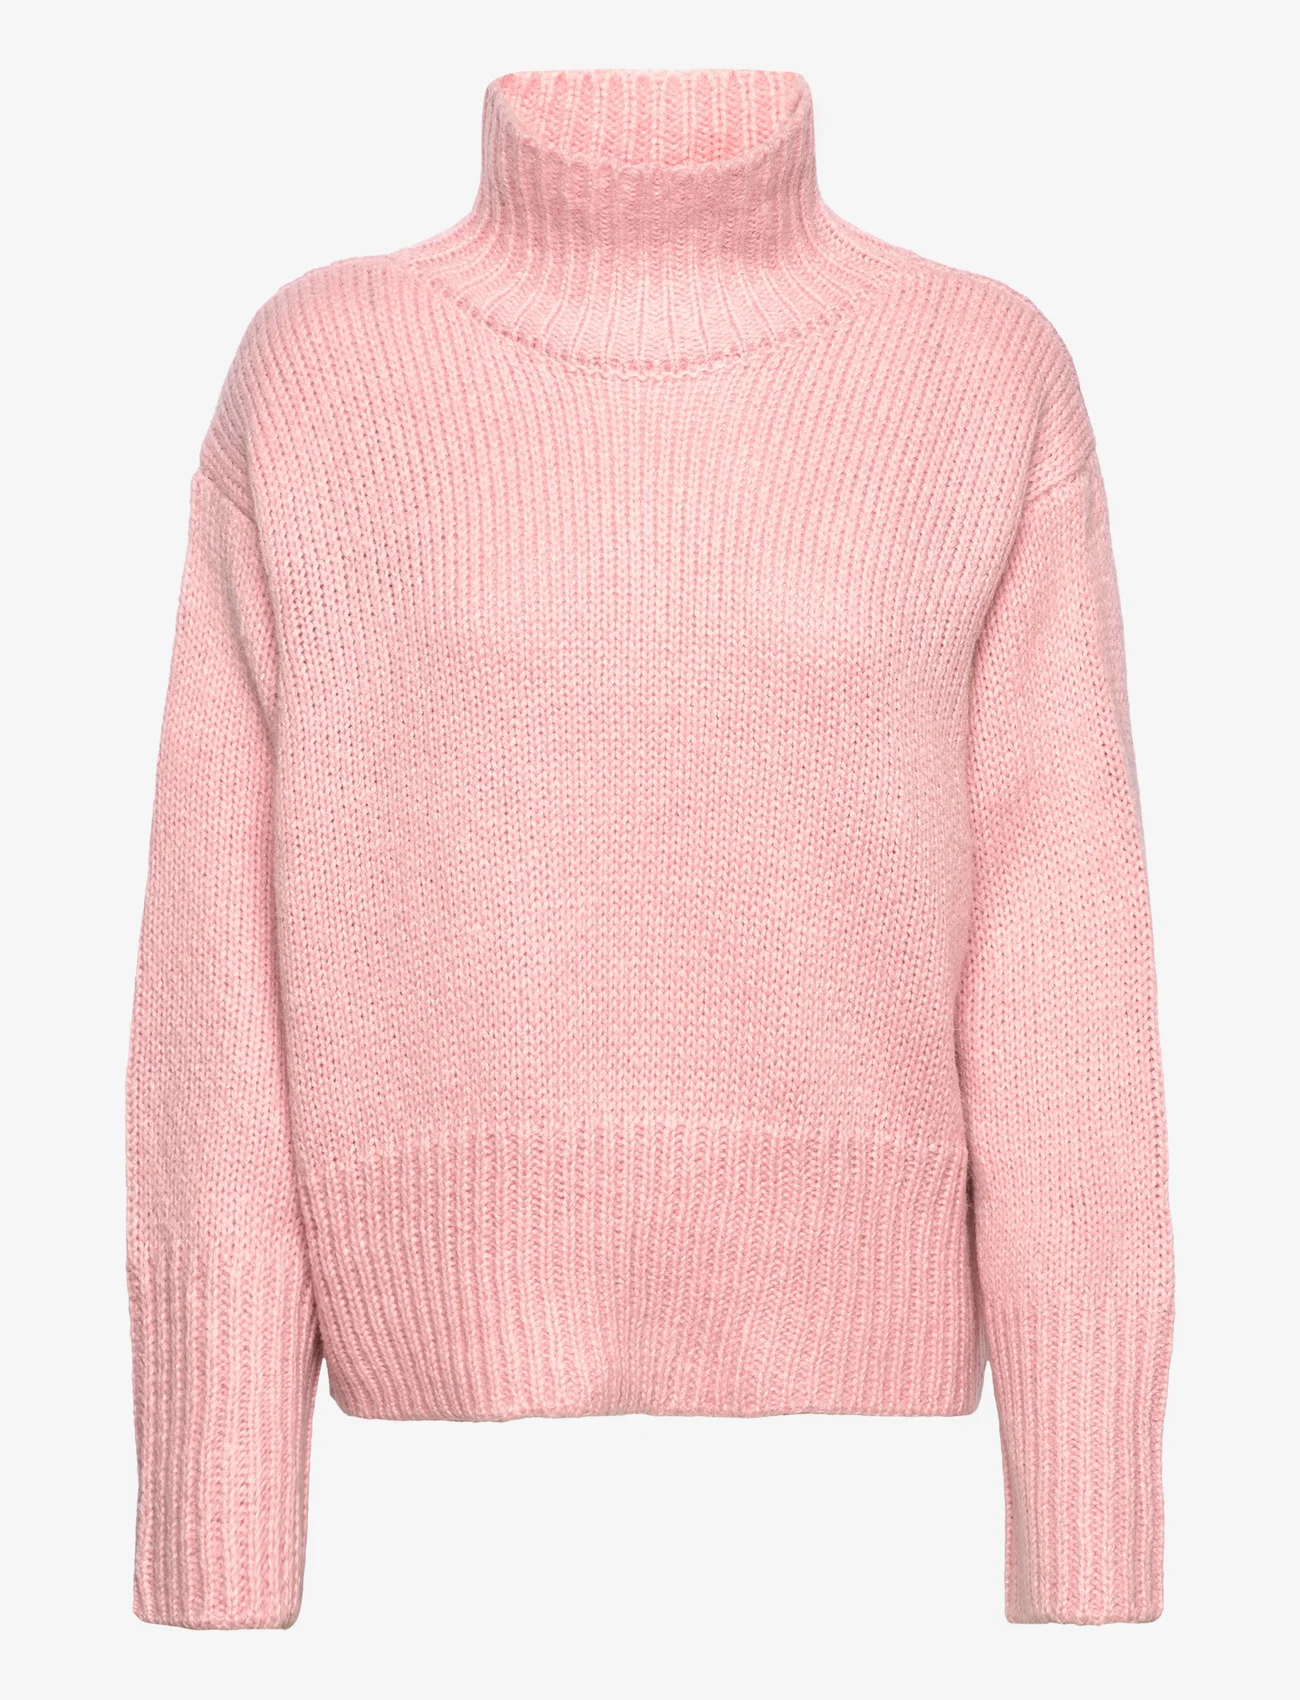 NORR - Fuscia knit top - rollkragenpullover - pink - 0